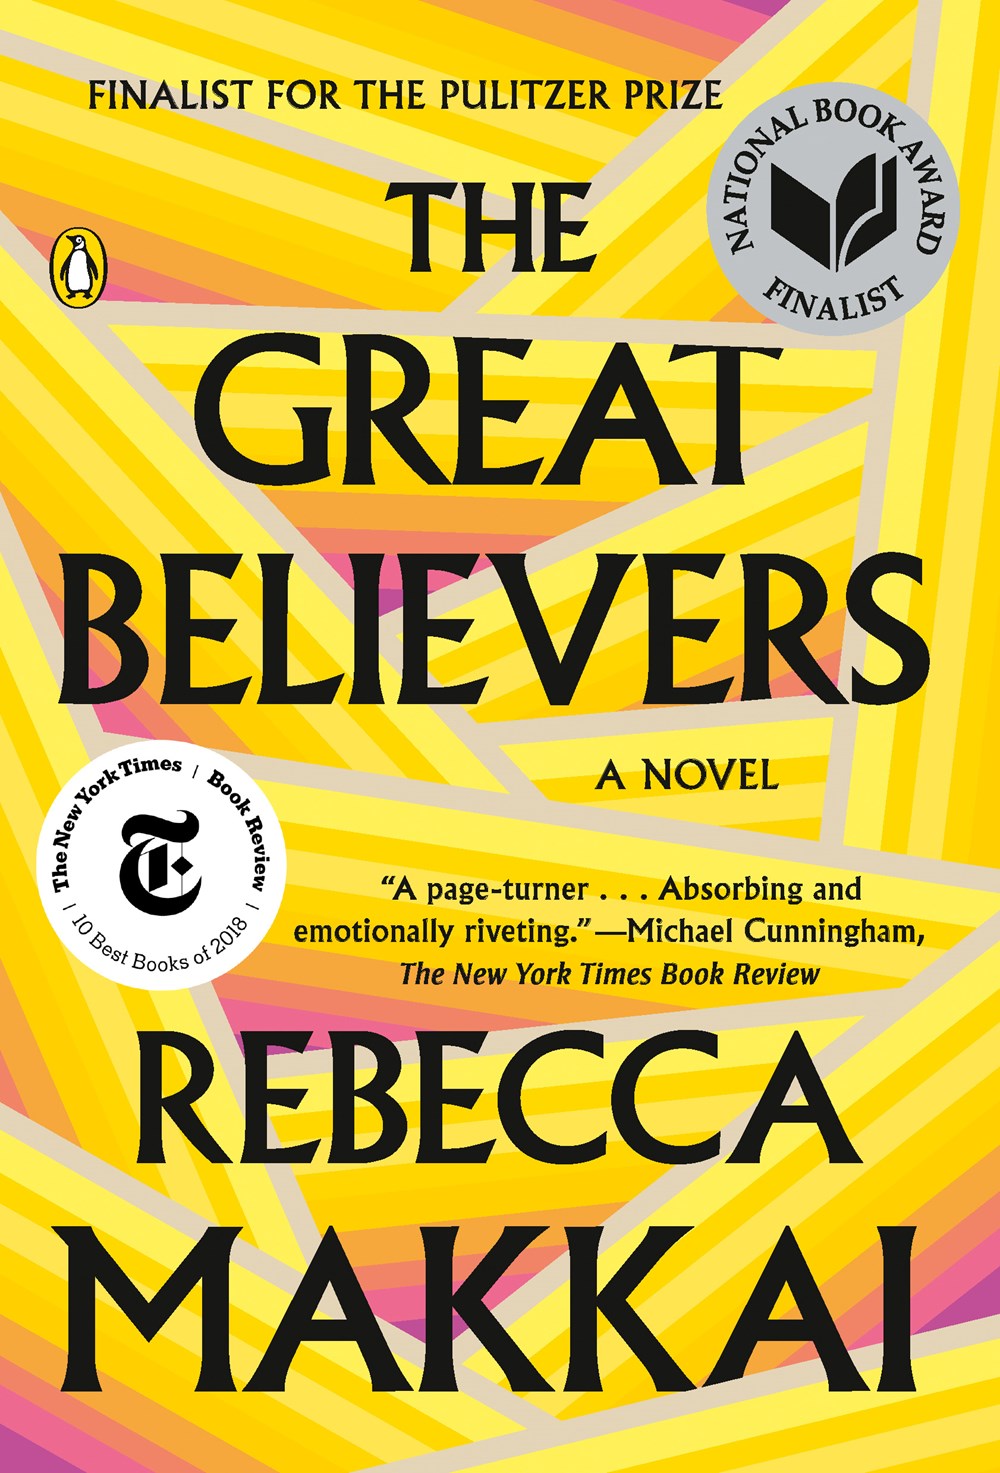 The Great Believers: A Novel by Rebecca Makkai